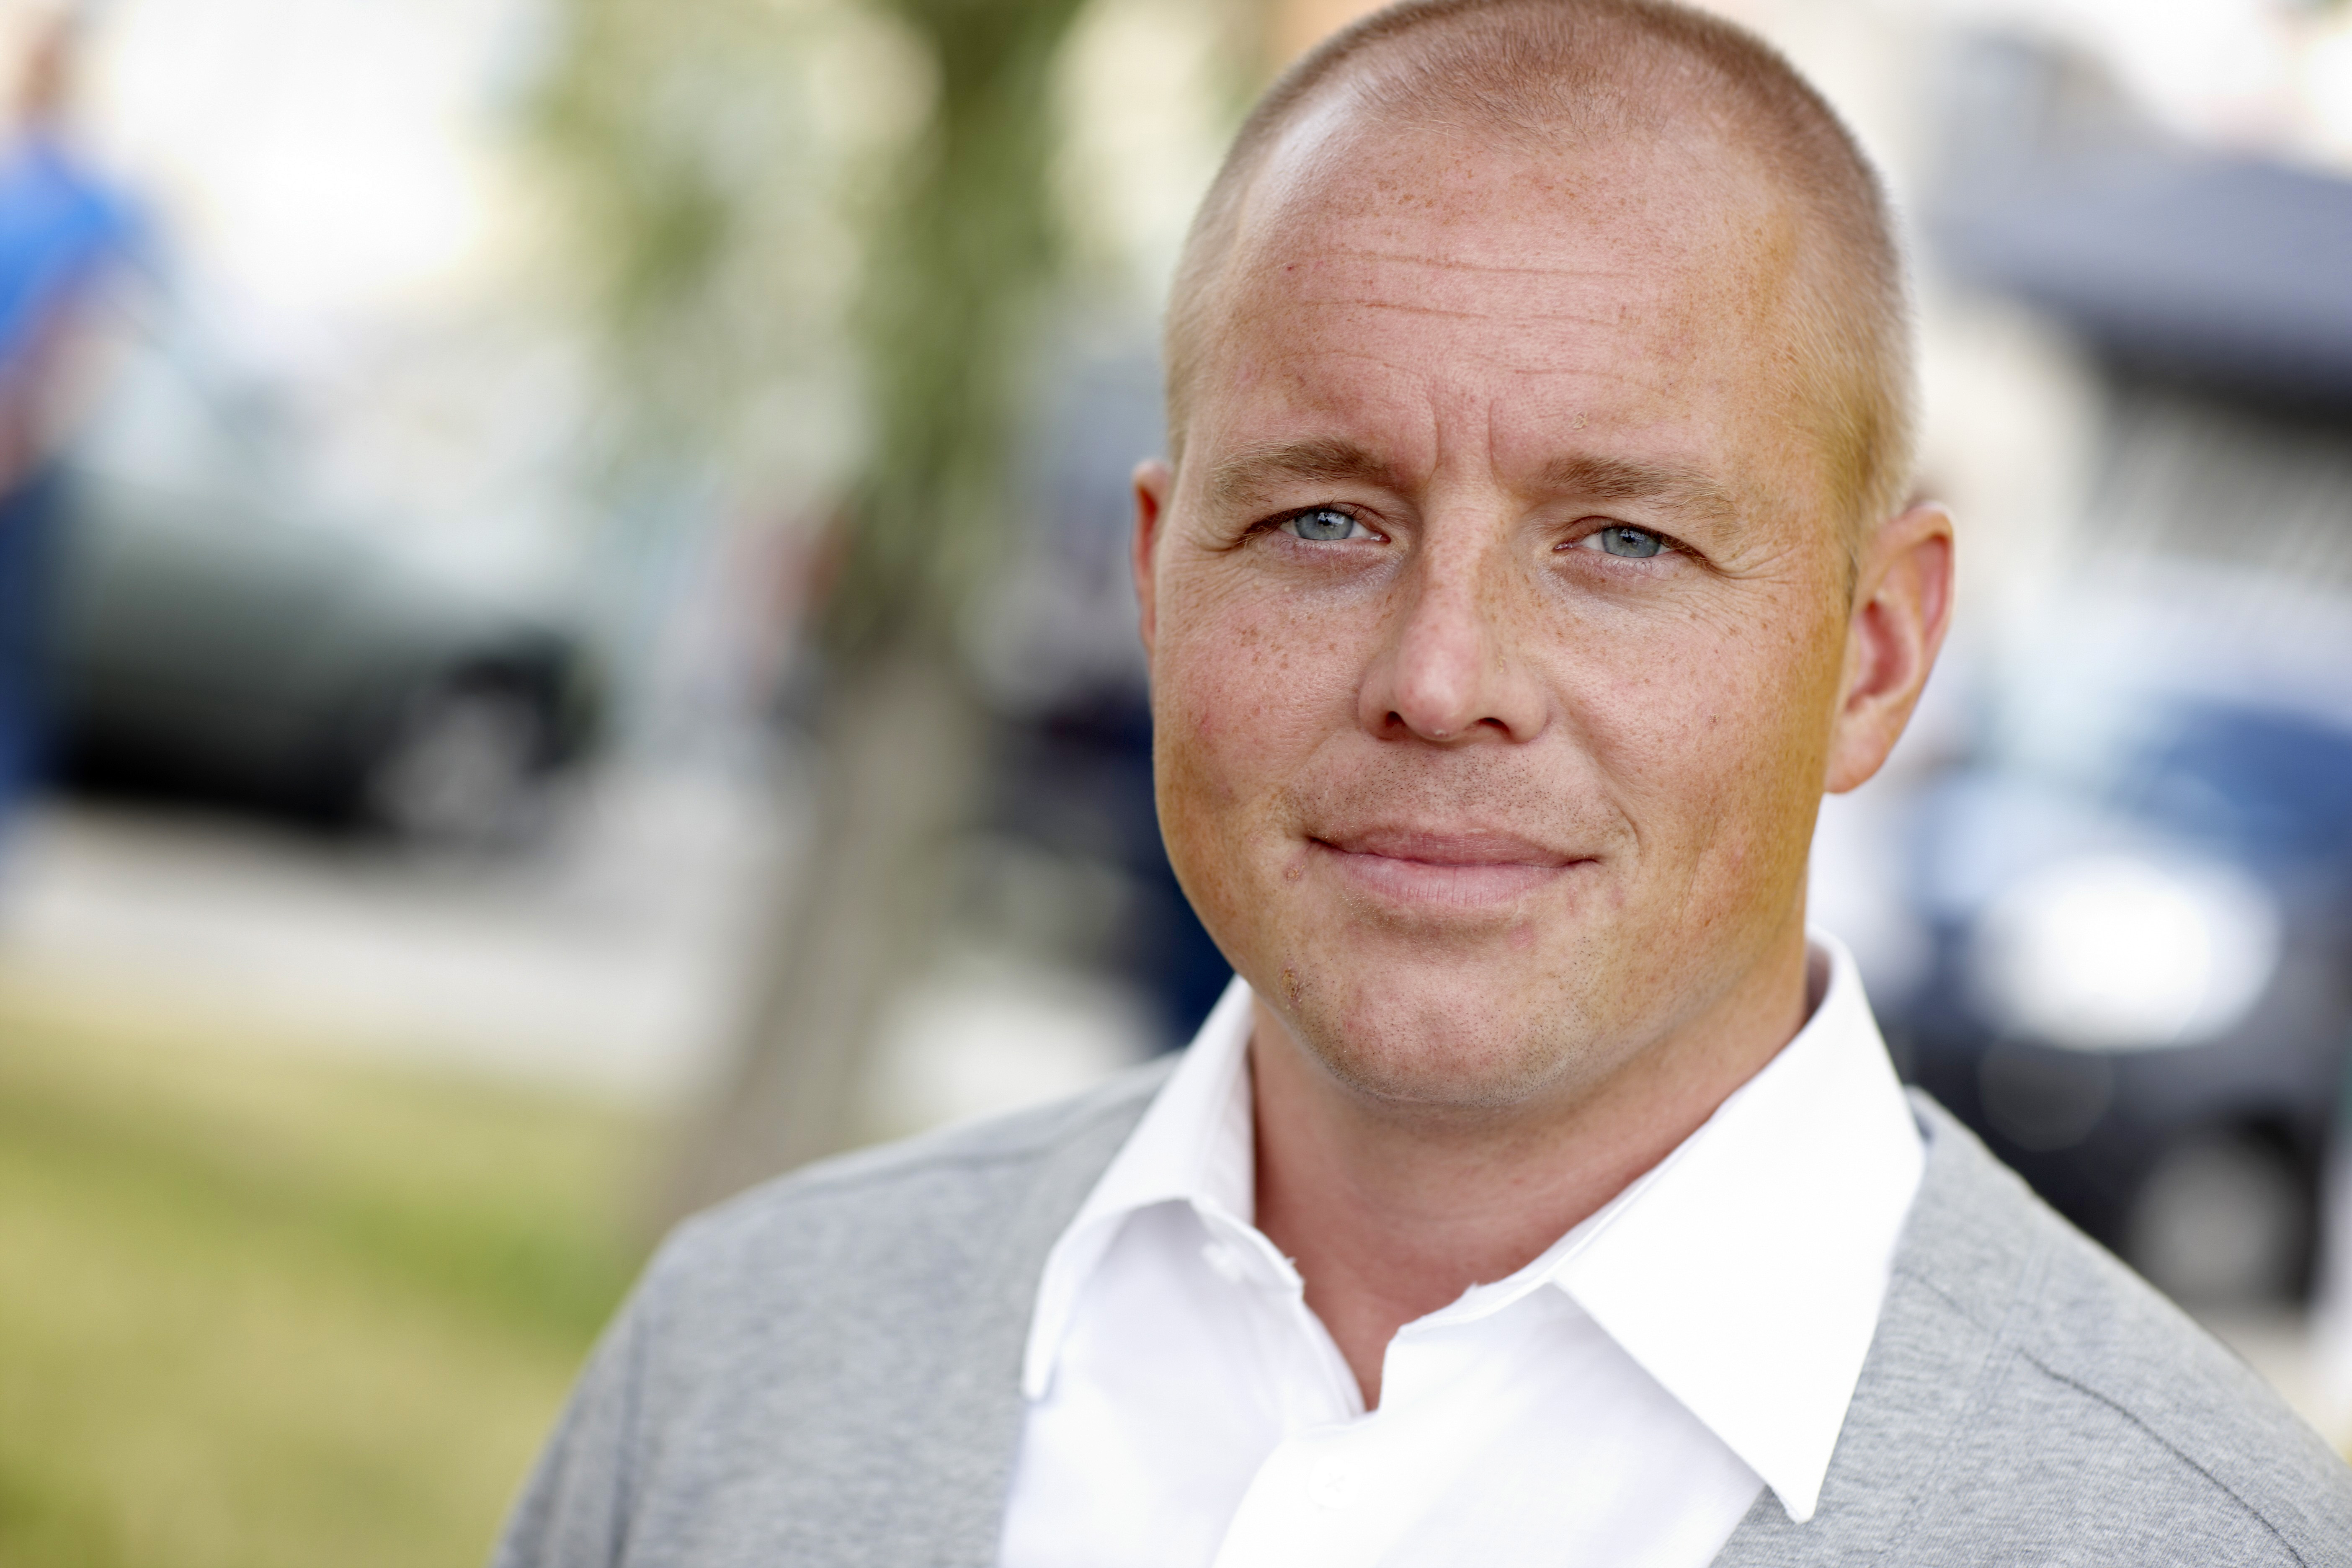 Björn Söder, Körkort, Elever, Skola, Indraget, Partisekreterare, Sverigedemokraterna, Bil